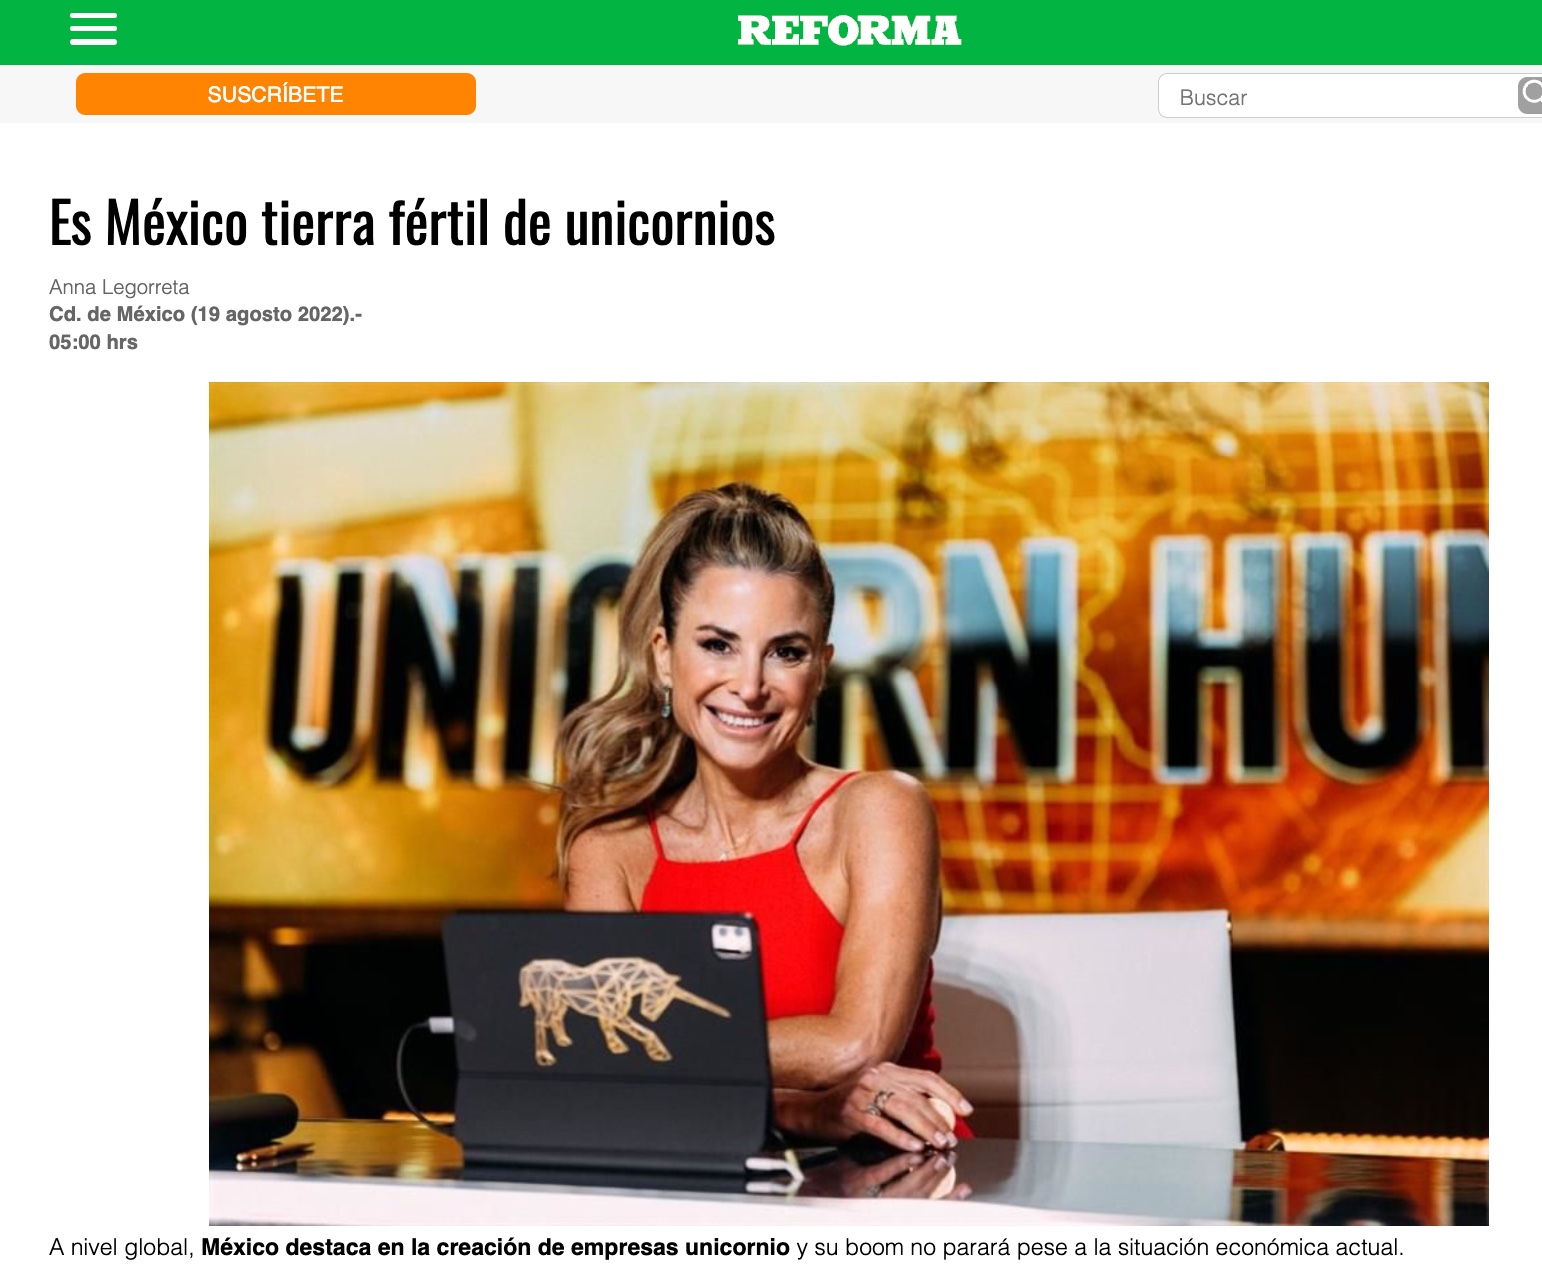 Reforma magazine interview with Silvina Moschini